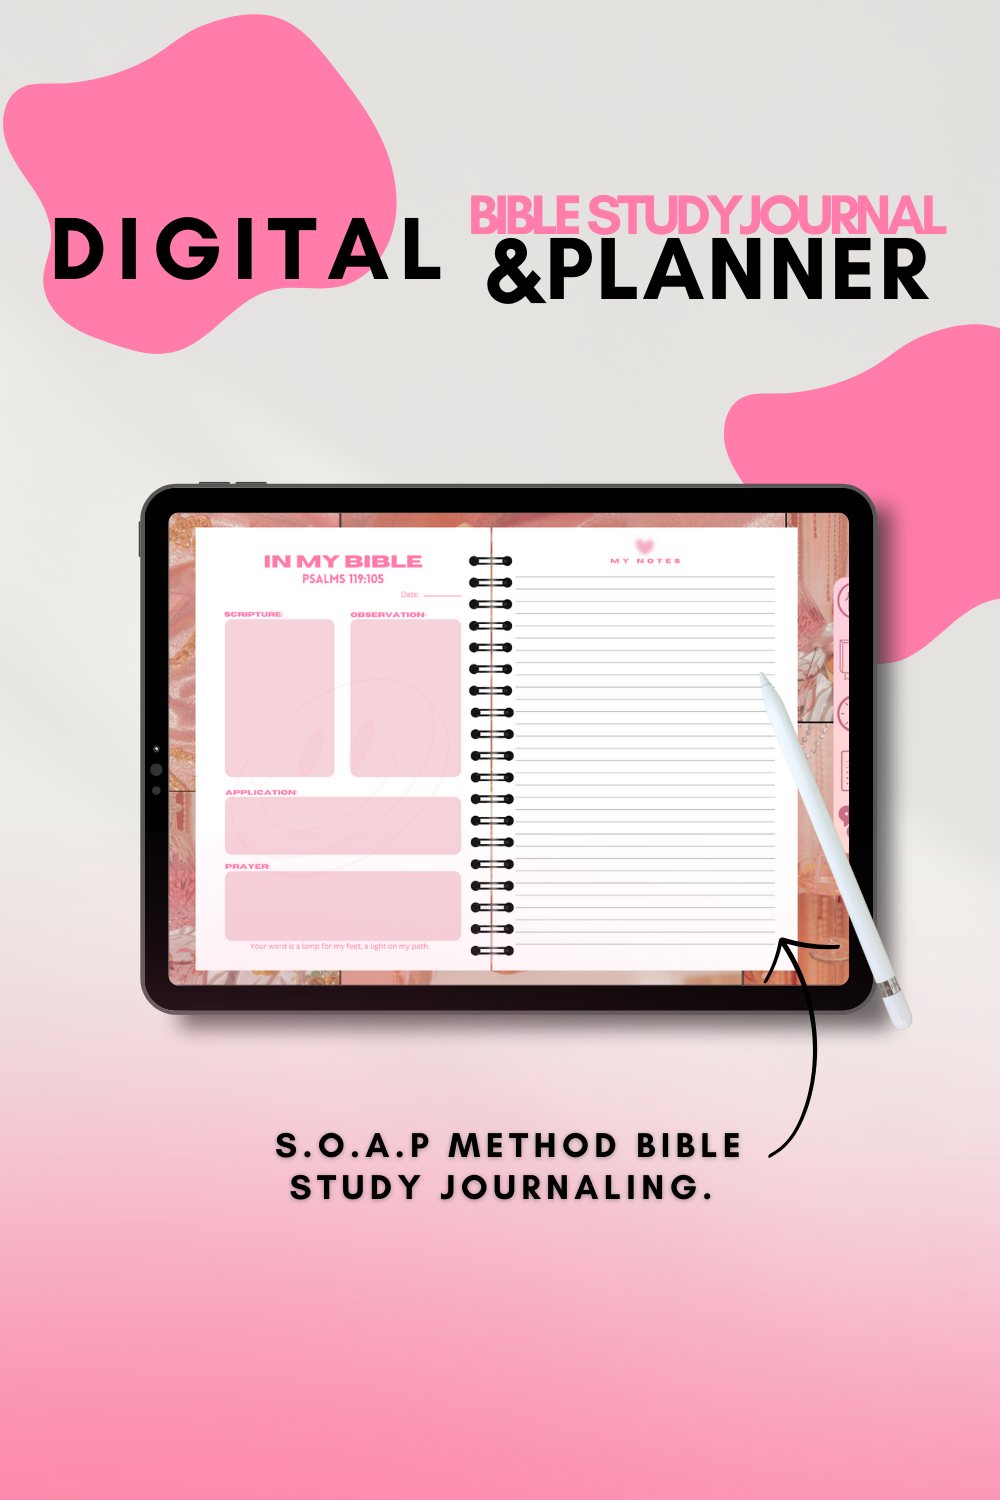 Digital Bible Study Journal & Planner